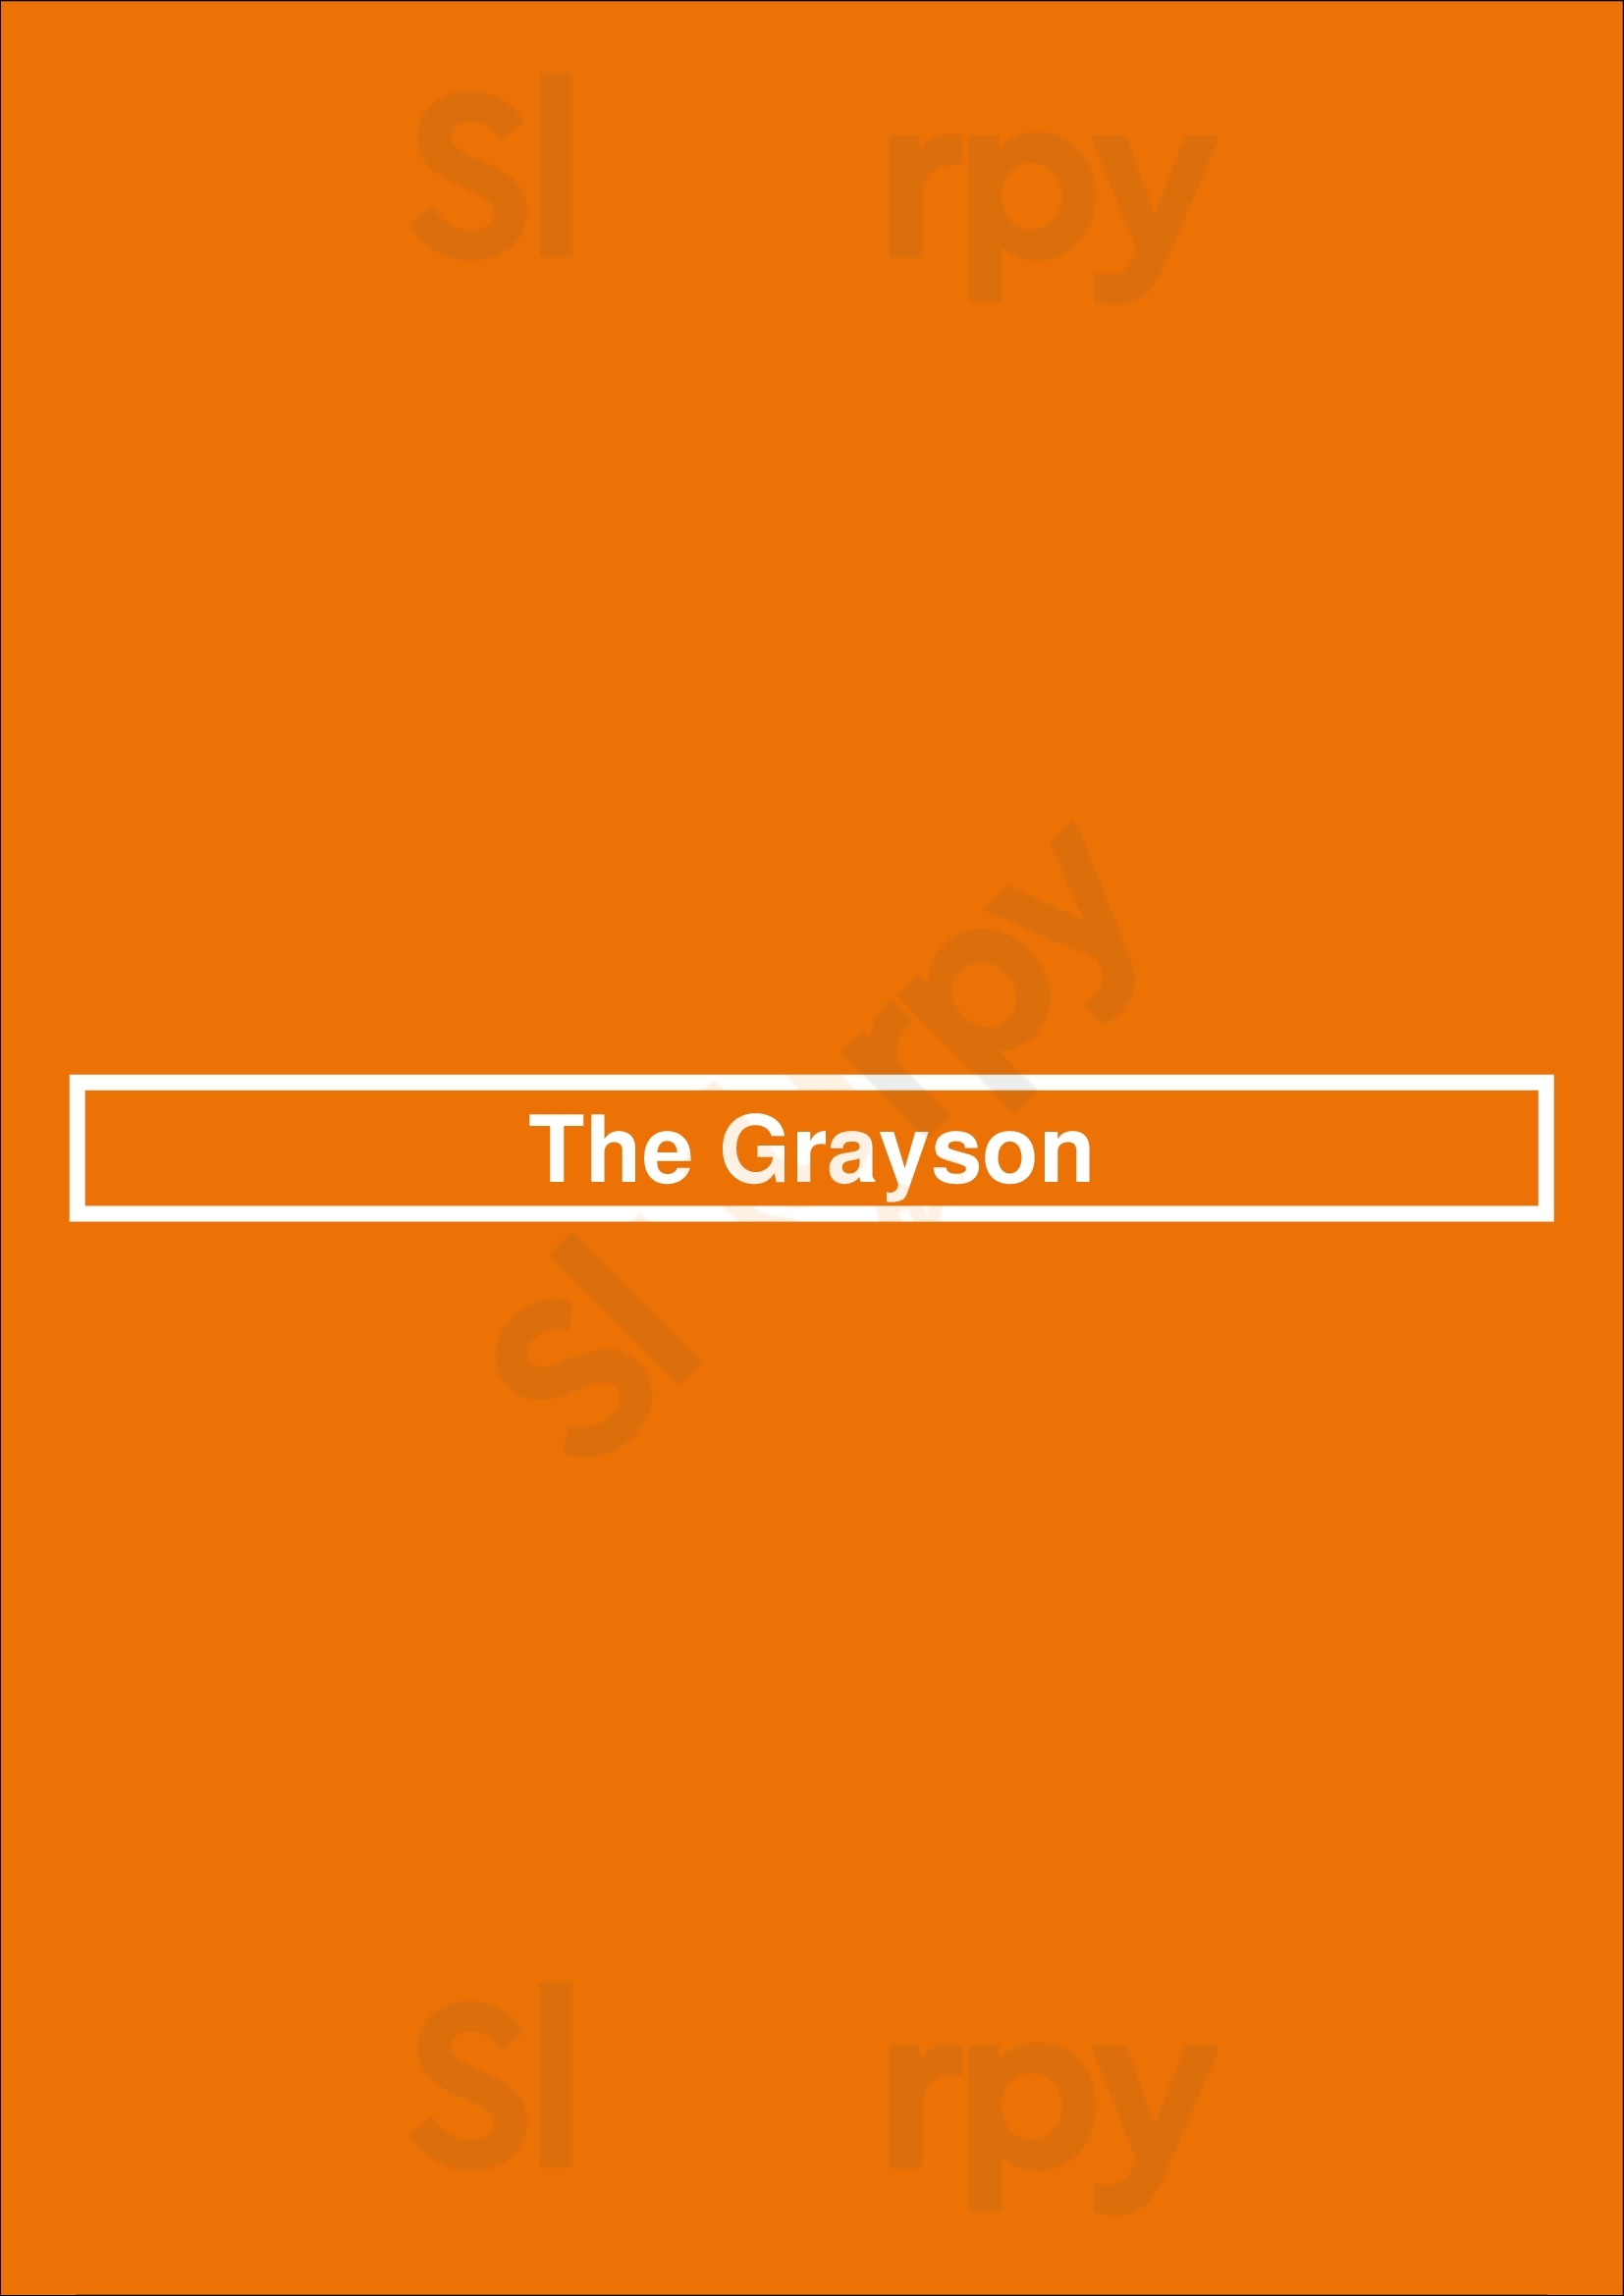 The Grayson Dublin Menu - 1